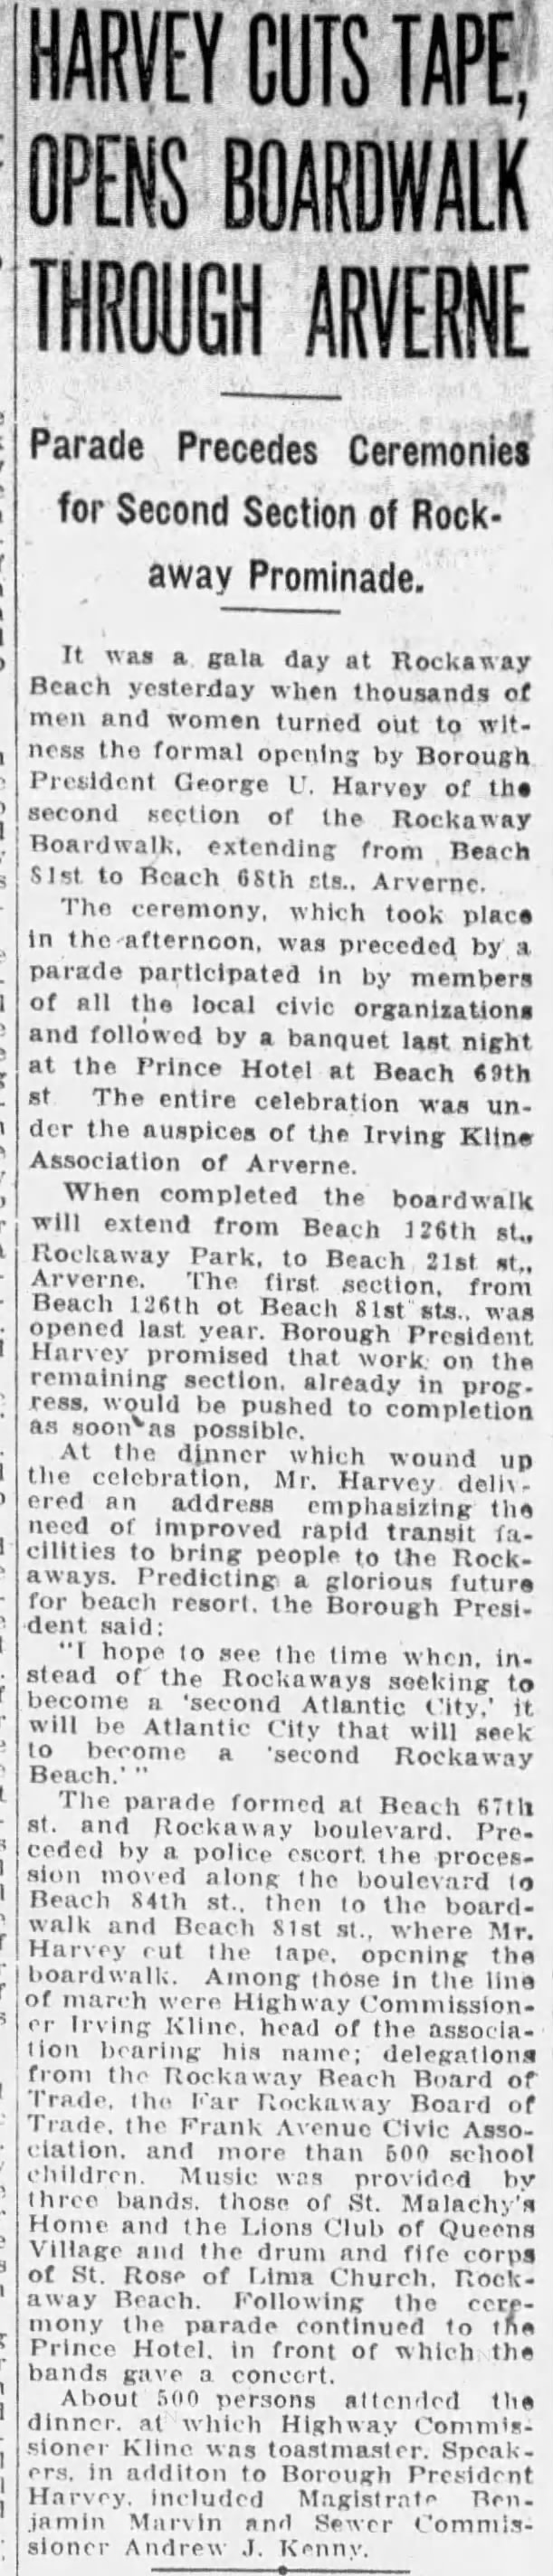 Harvey Cuts Tape, Opens Boardwalk Through Arverne